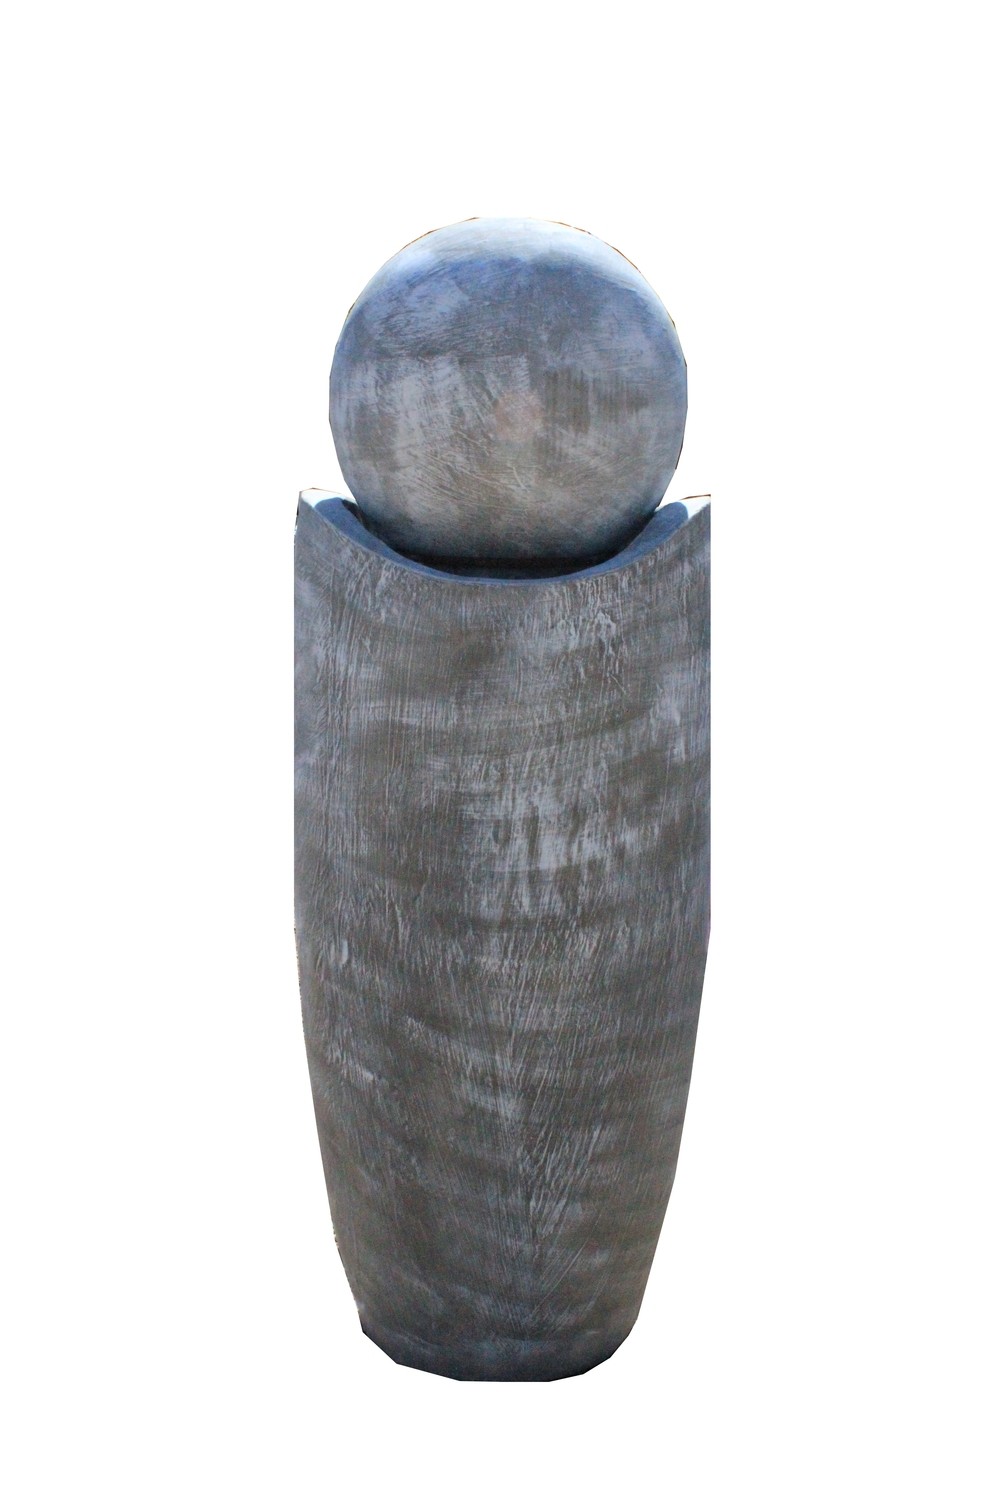 Zip Vase Ball Fountain X-large